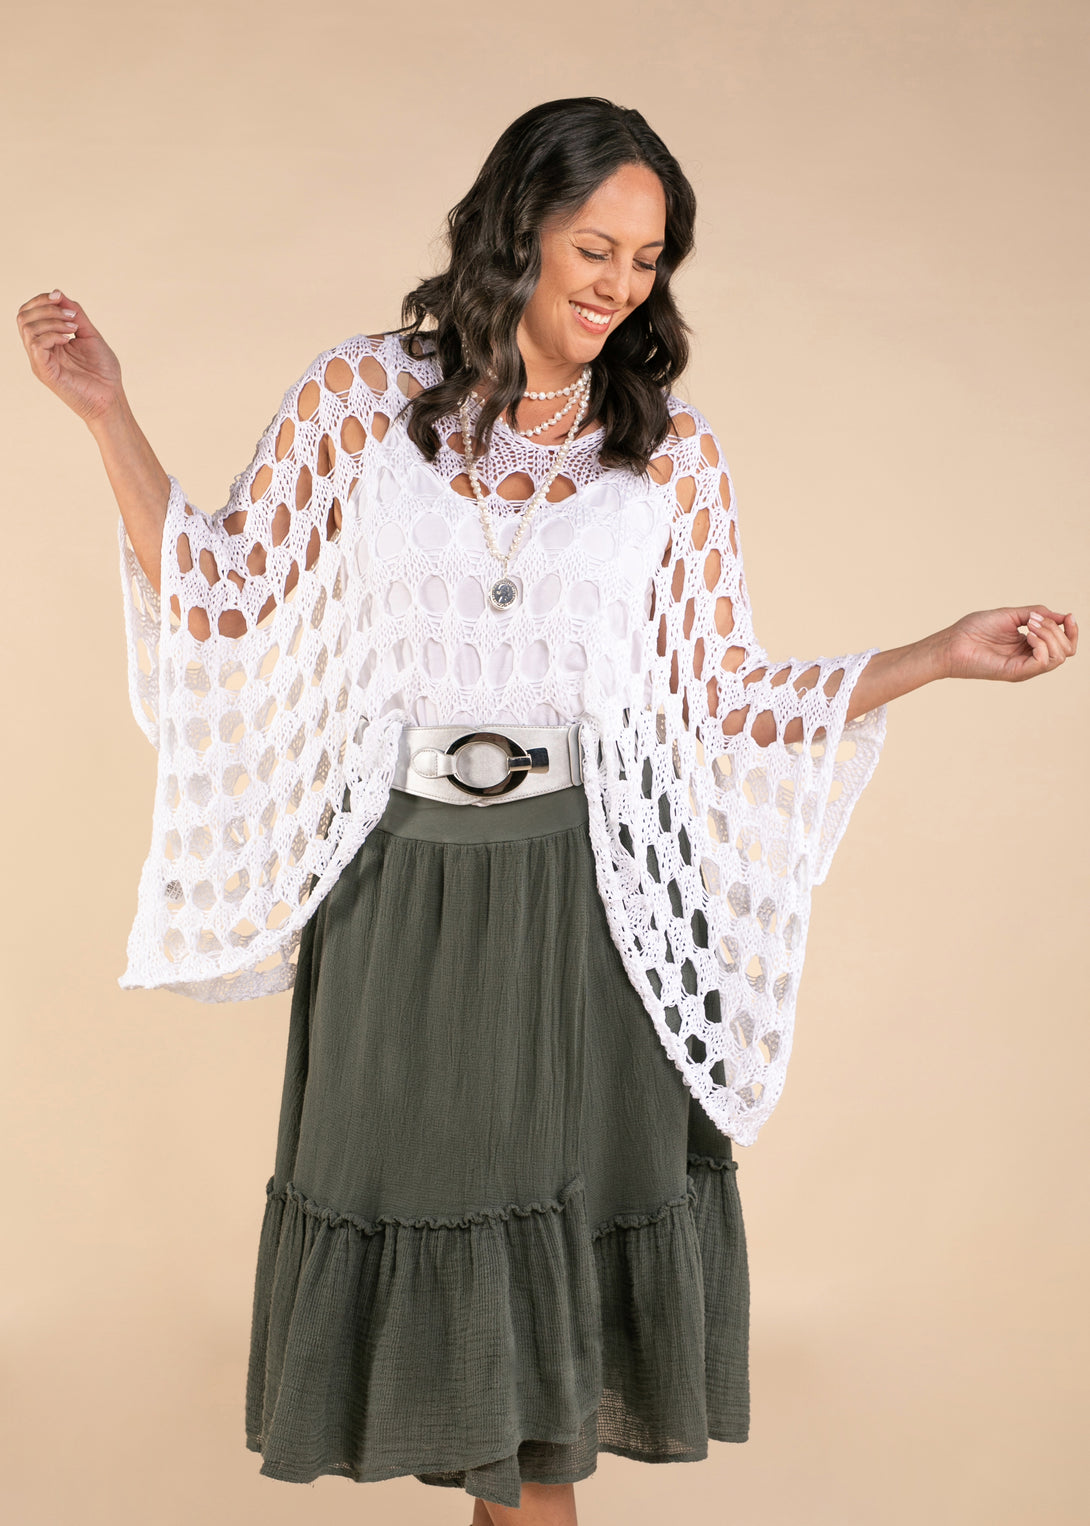 Asha Knit Top in White - Imagine Fashion